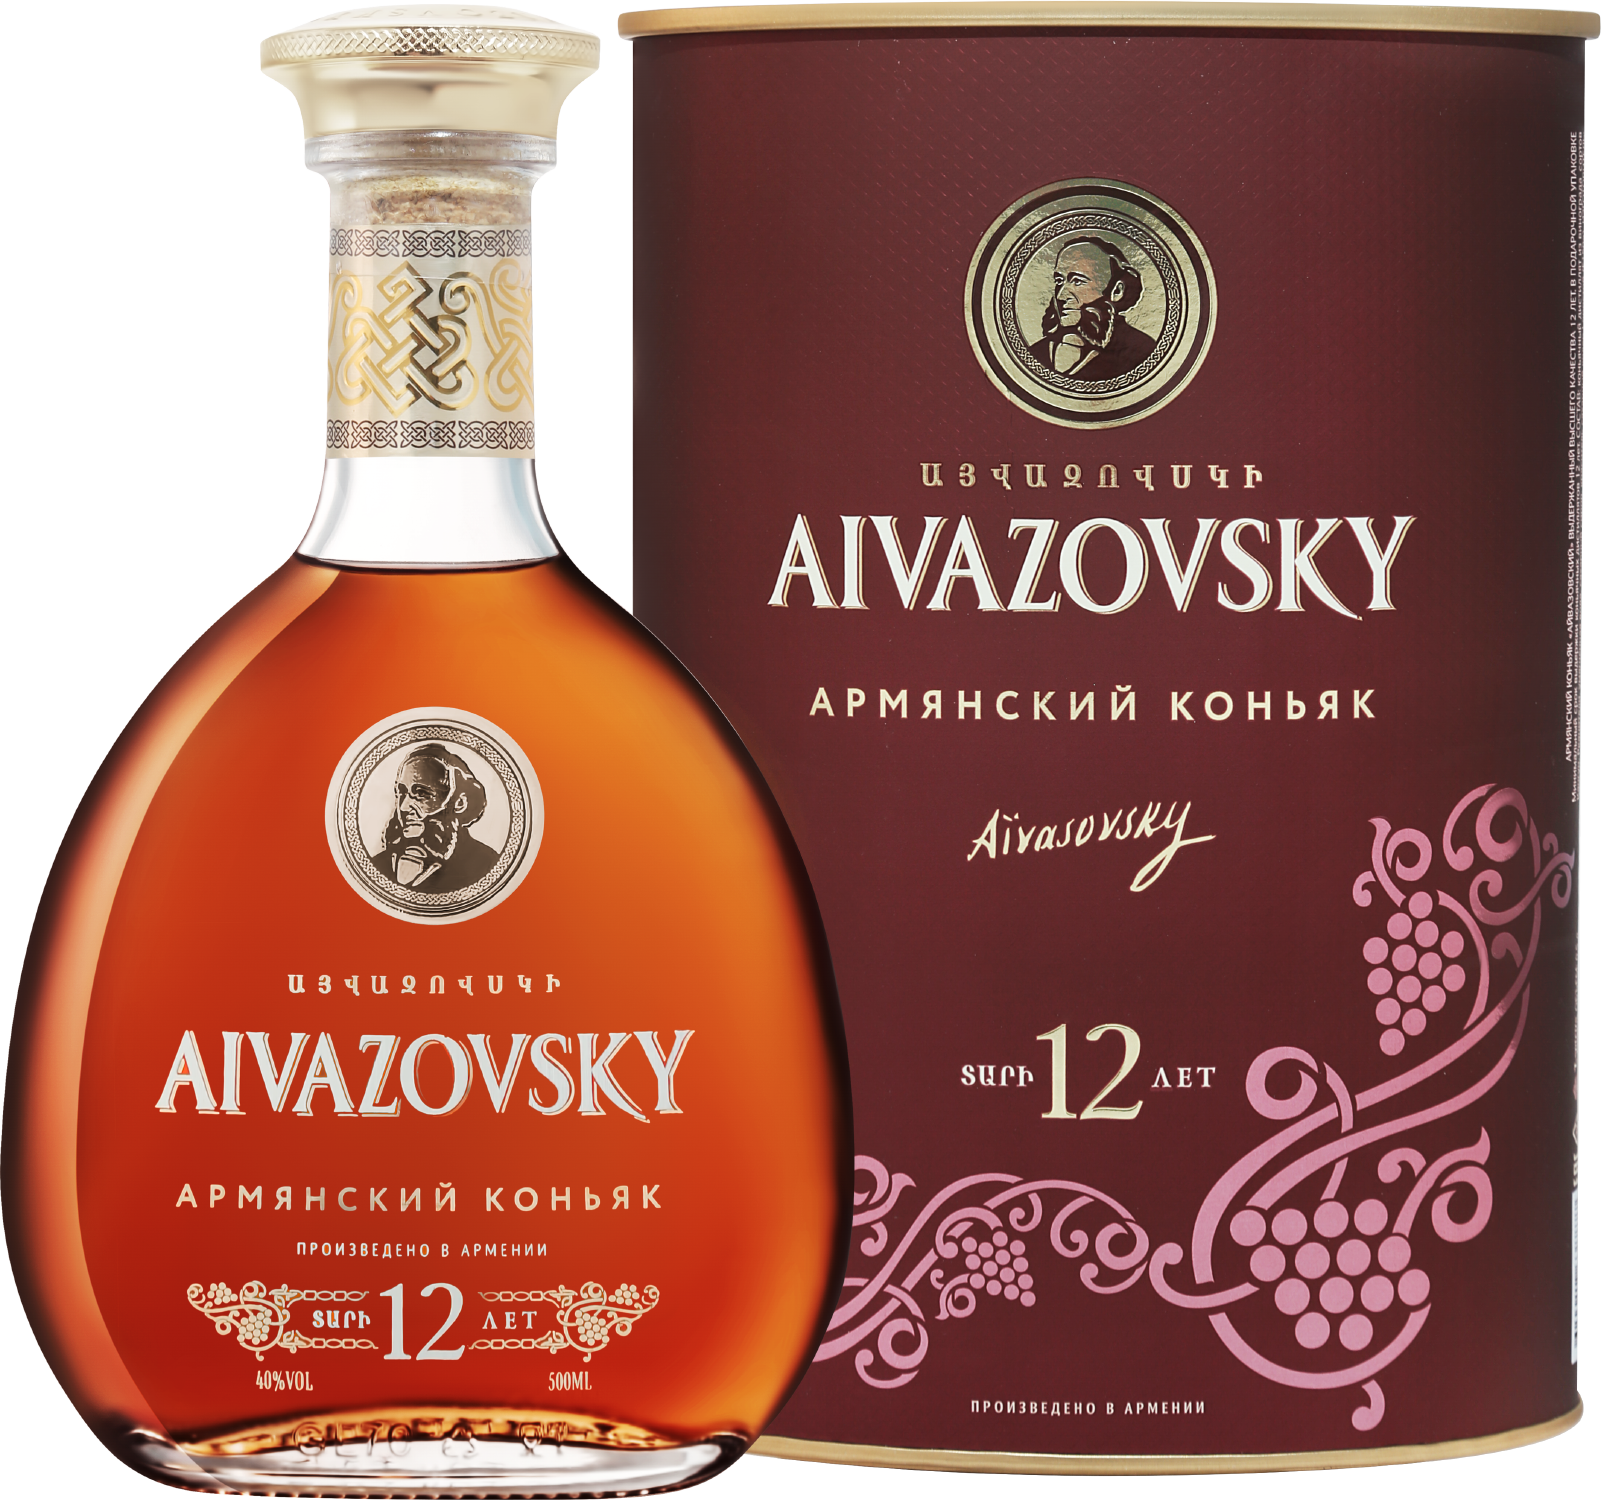 Aivazovsky Old Armenian Brandy 12 Y.O. (gift box) aivazovsky armenian brandy 8 y o gift box